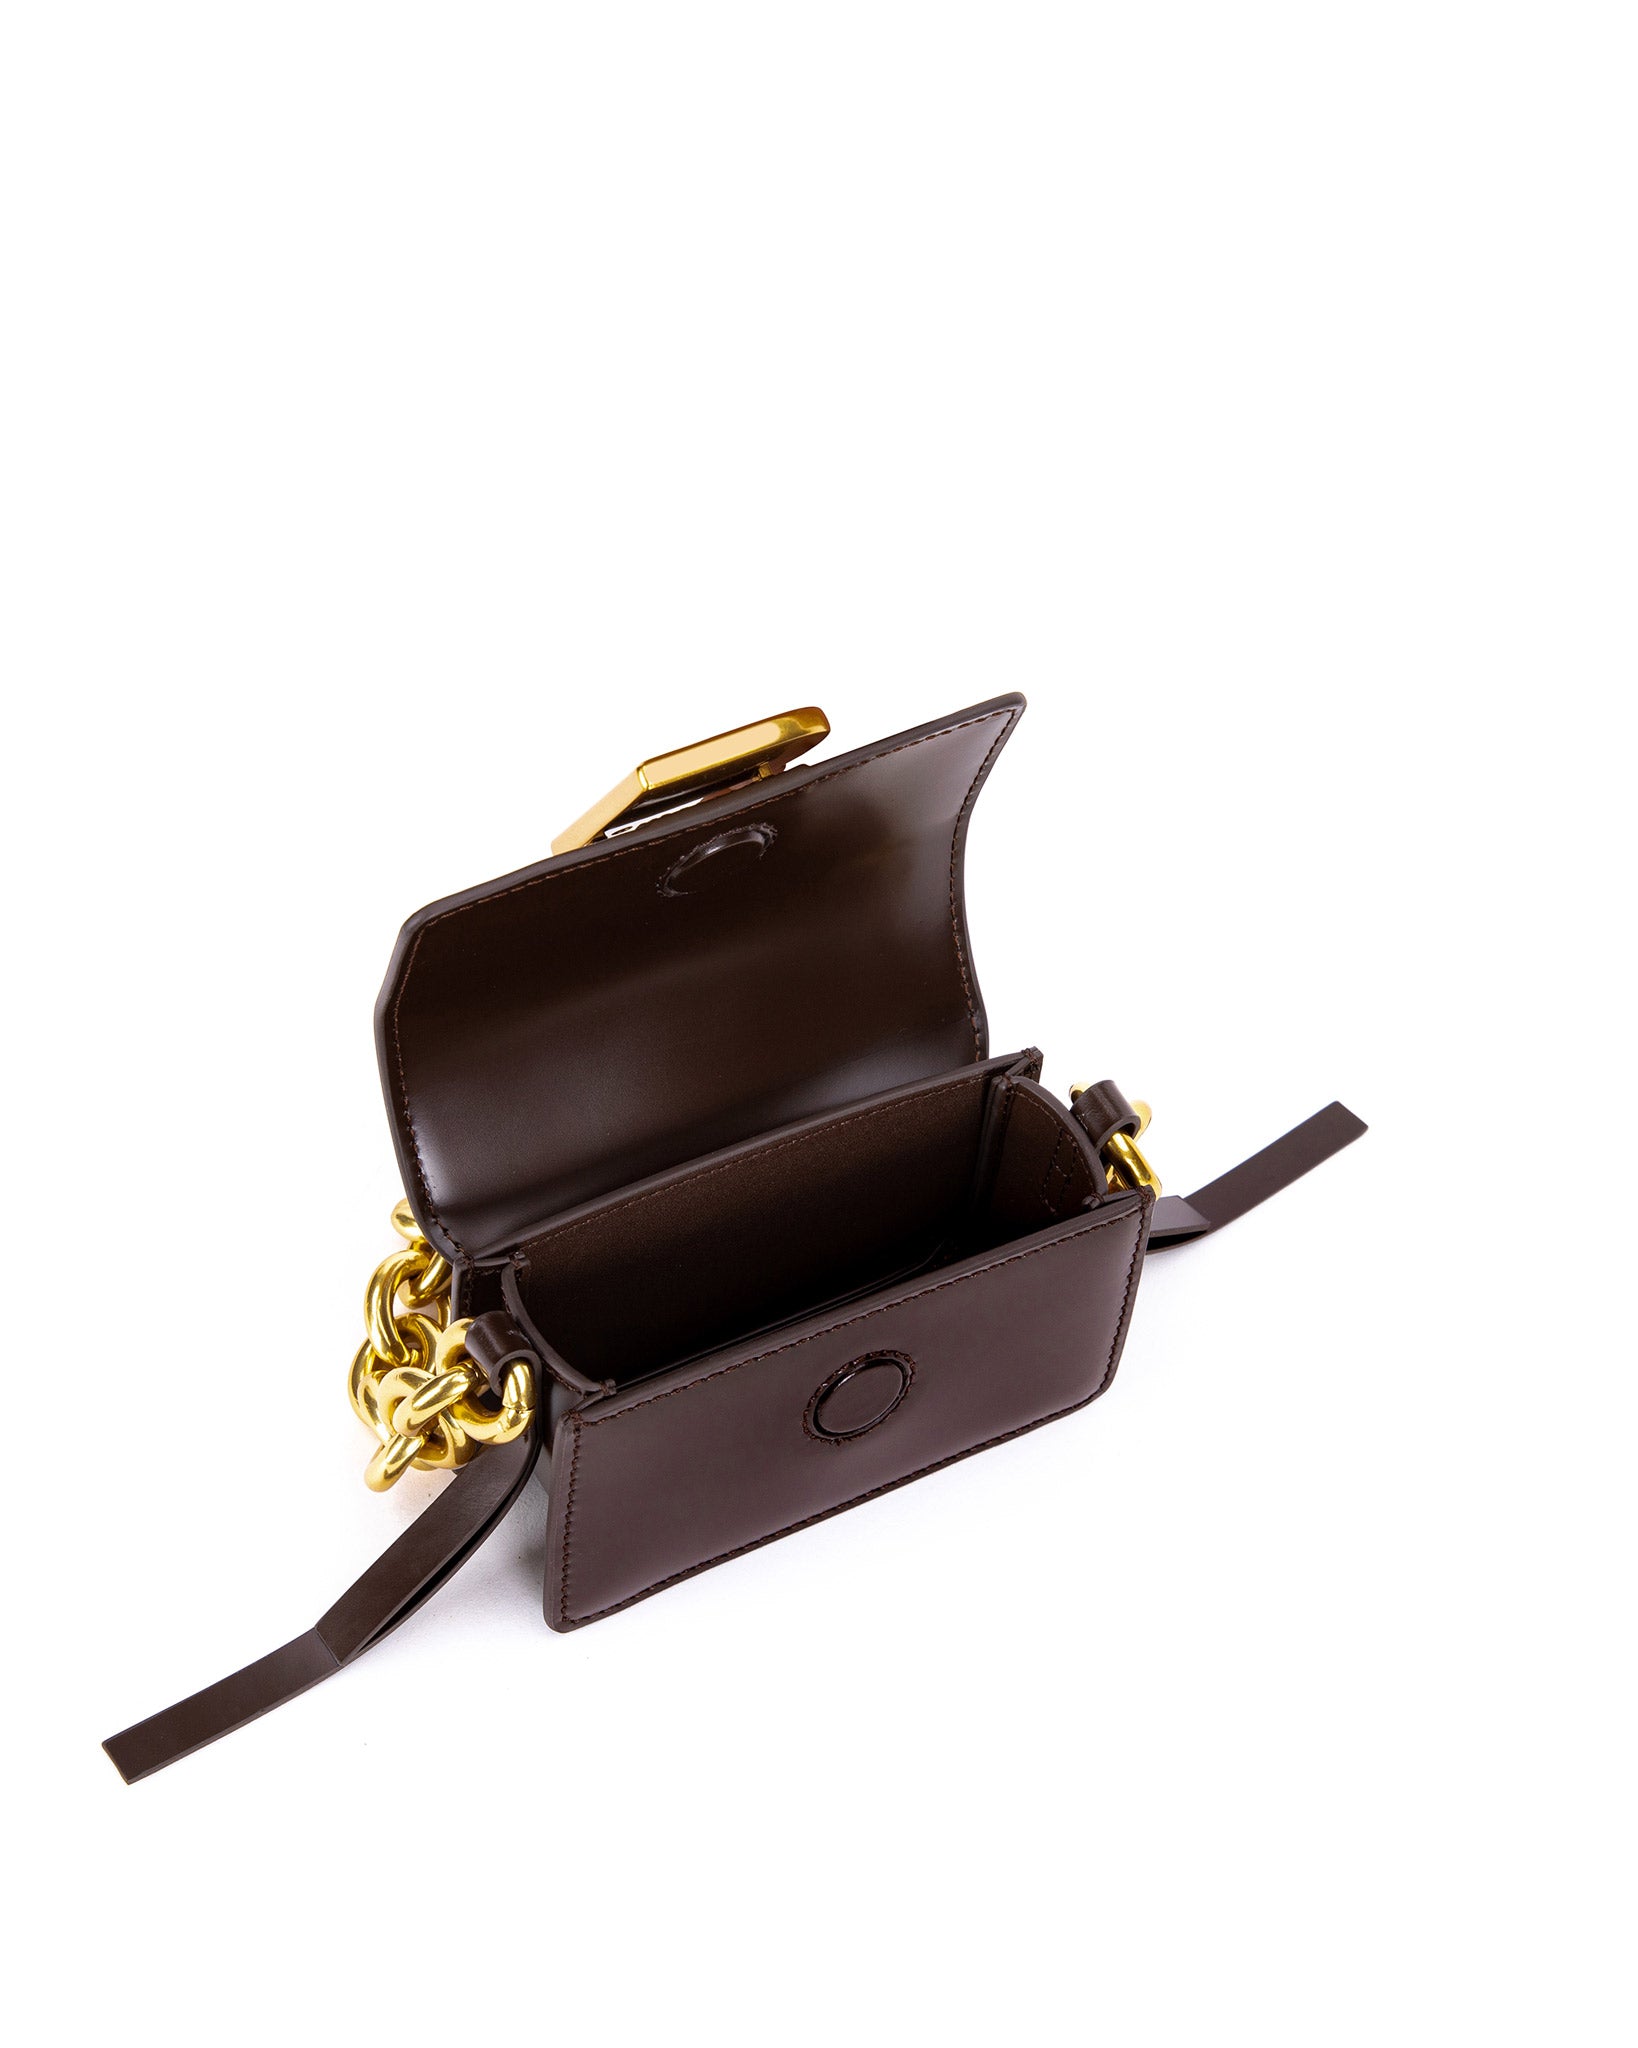 Rose Gold Cowhide Wristlet/Clutch - ShopperBoard